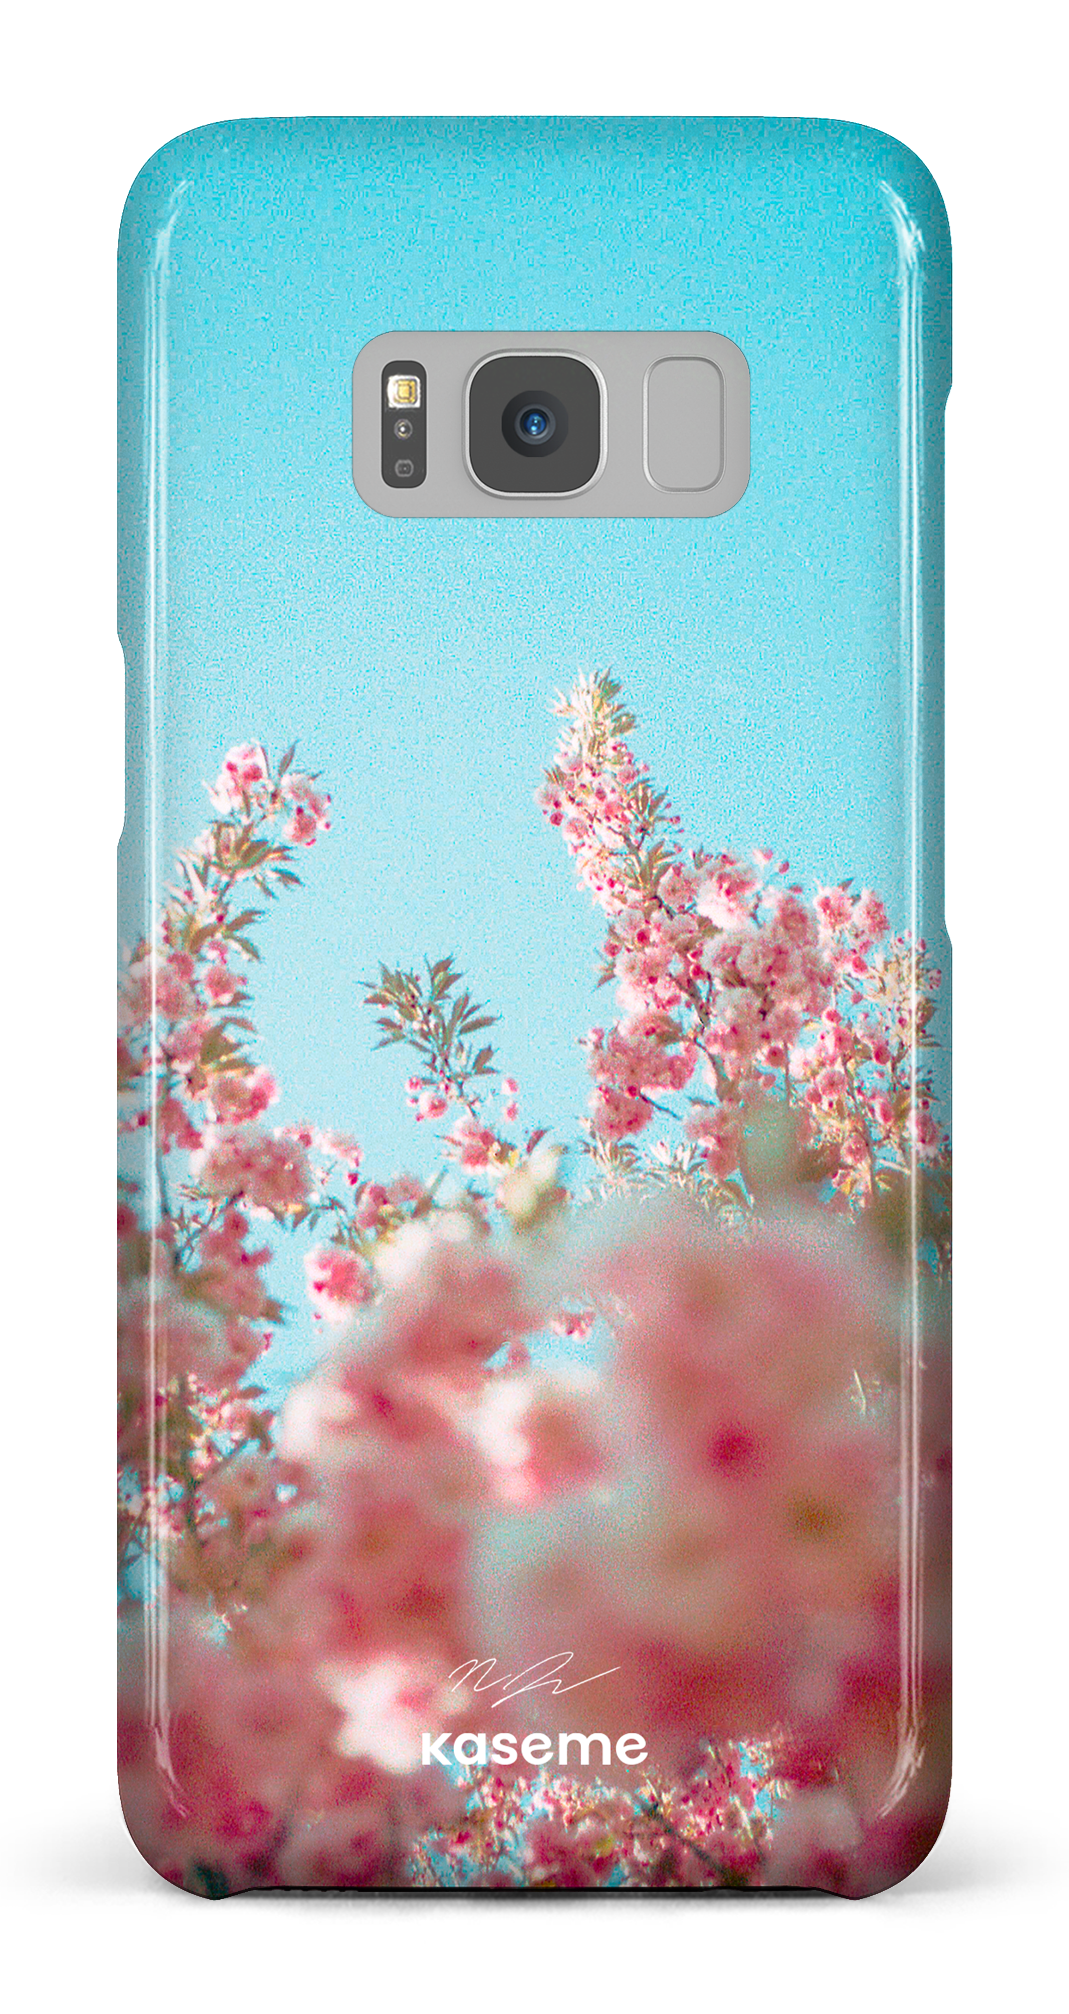 Bloom by Nevin Johnson - Galaxy S8